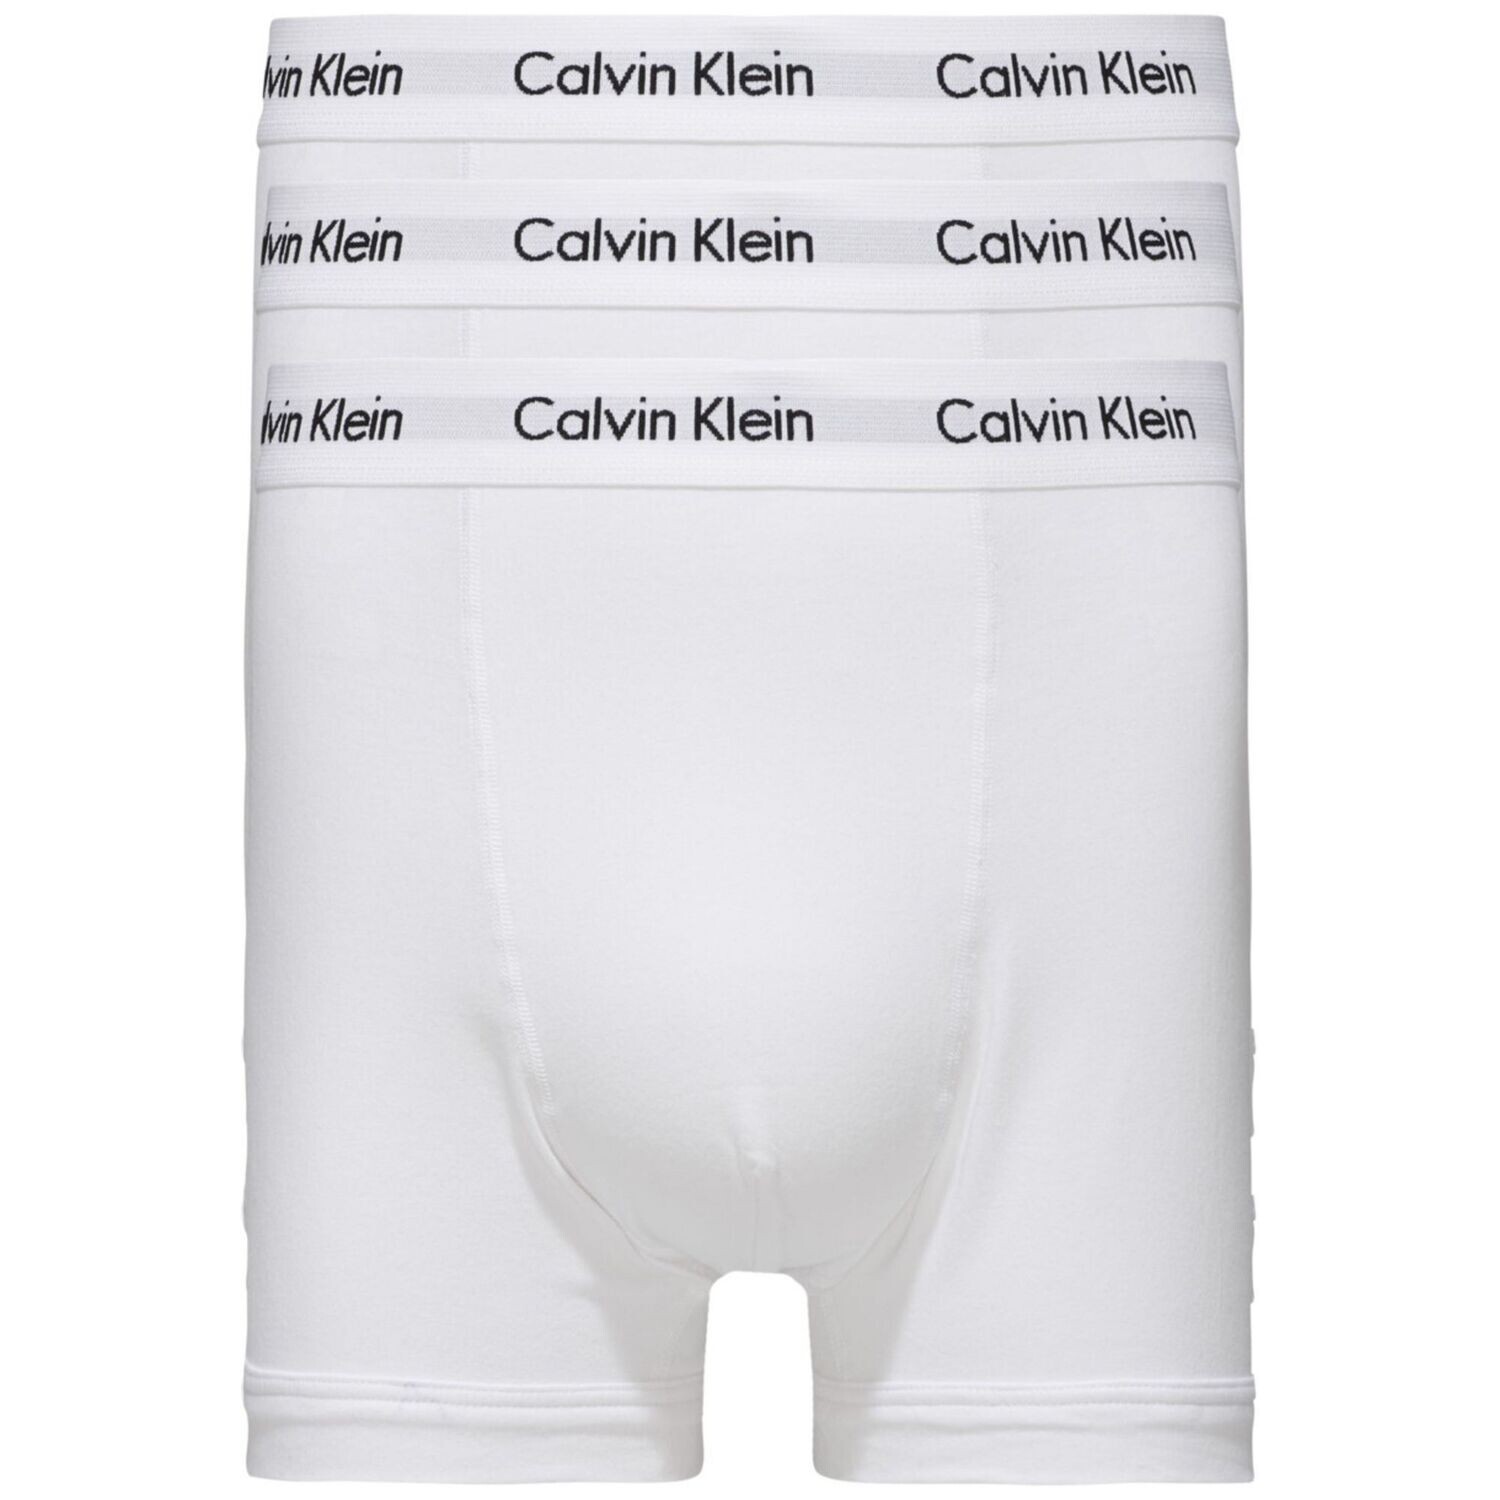 U2662G - Calvin Klein 3Trunks White